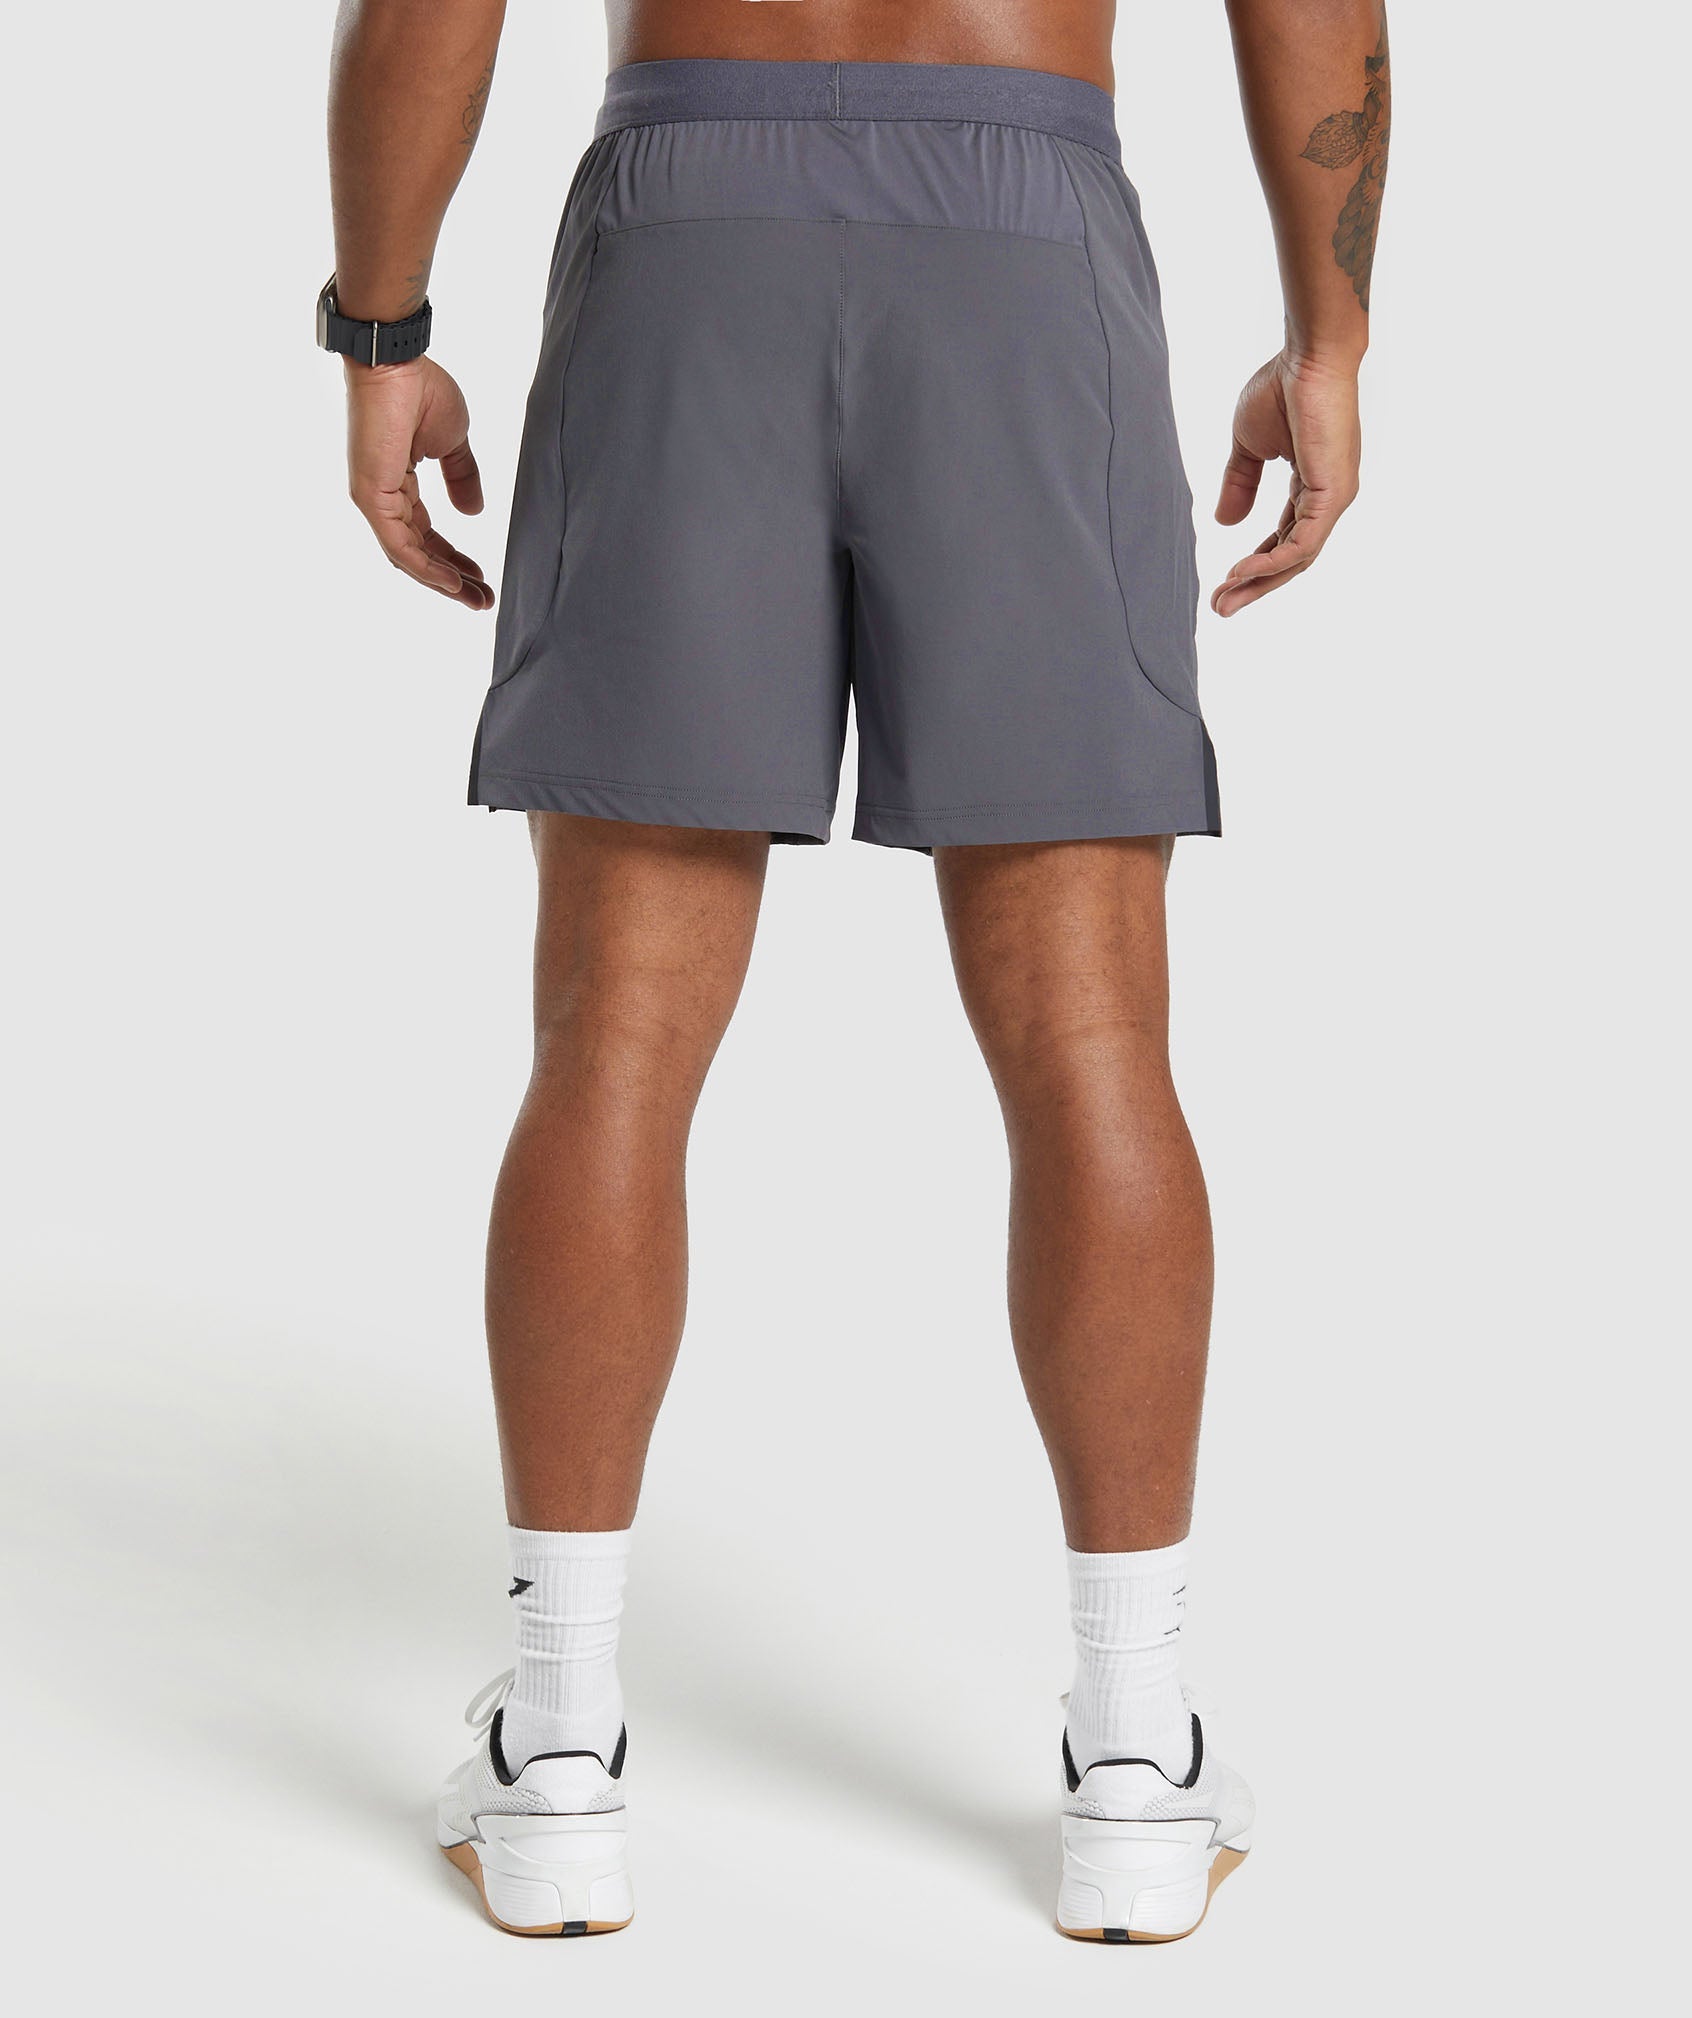 Apex 7" Hybrid Shorts in Dark Grey - view 2